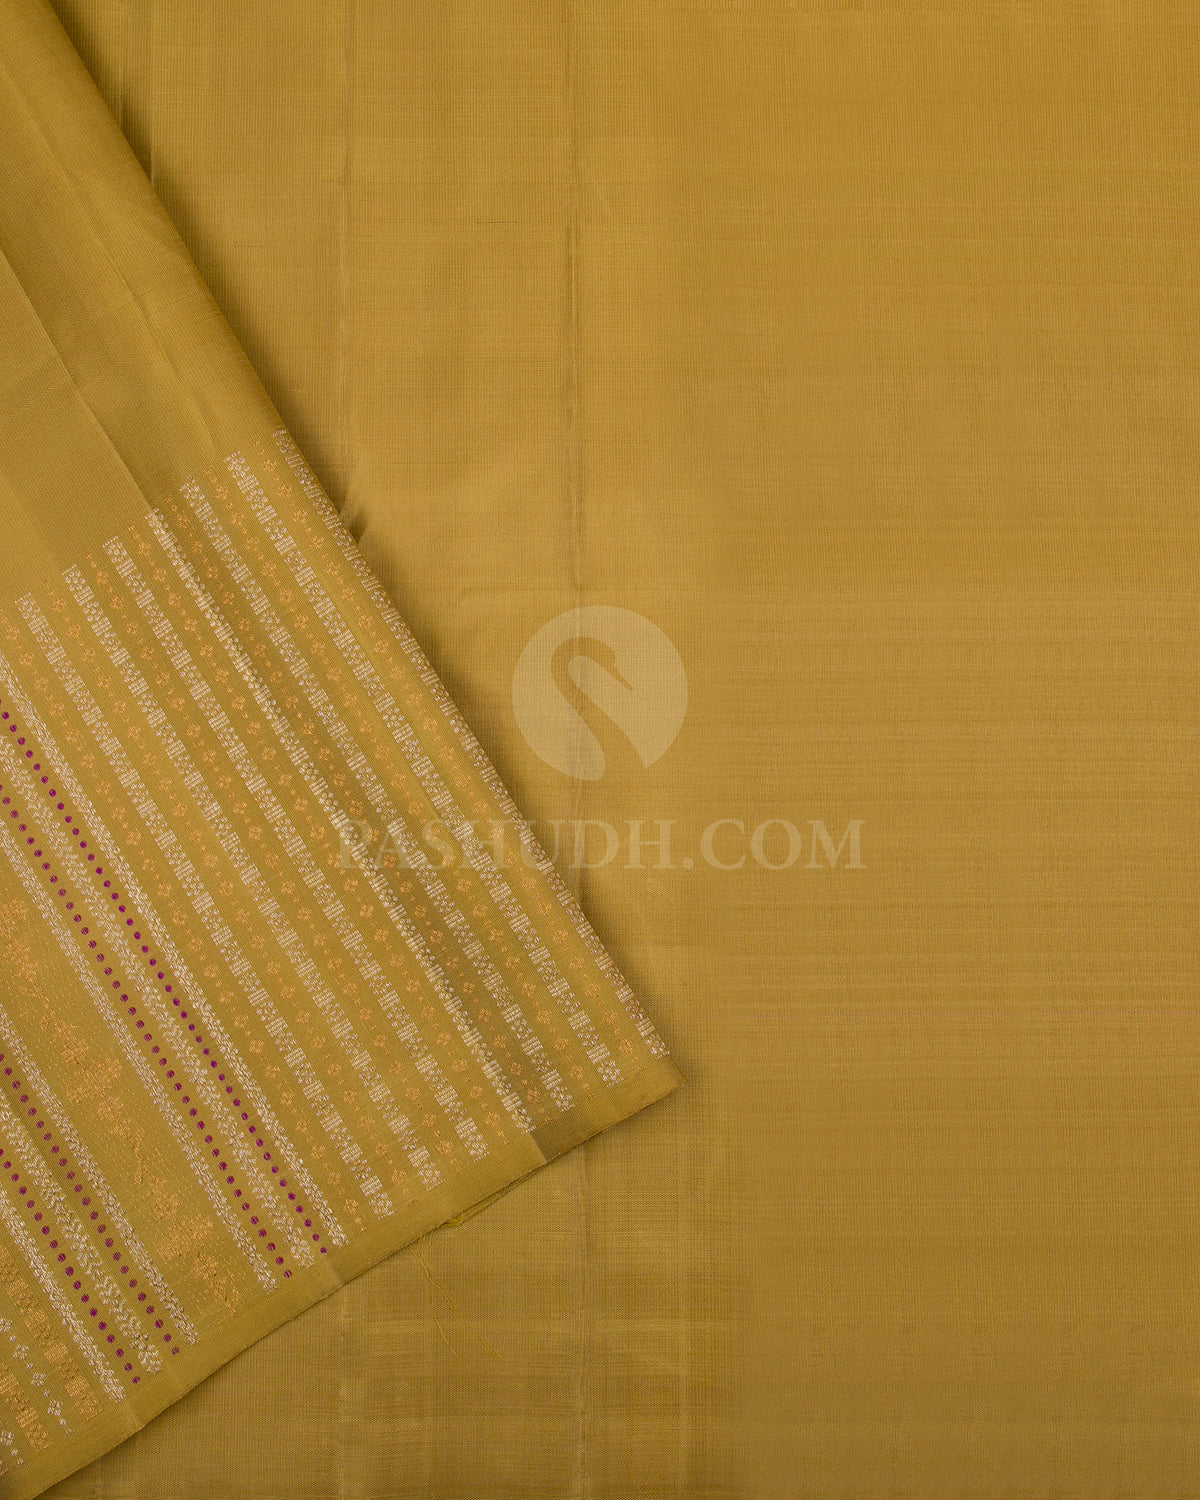 Rani Pink And Golden Khaki Kanjivaram Silk Saree - S1030(C) - View 3